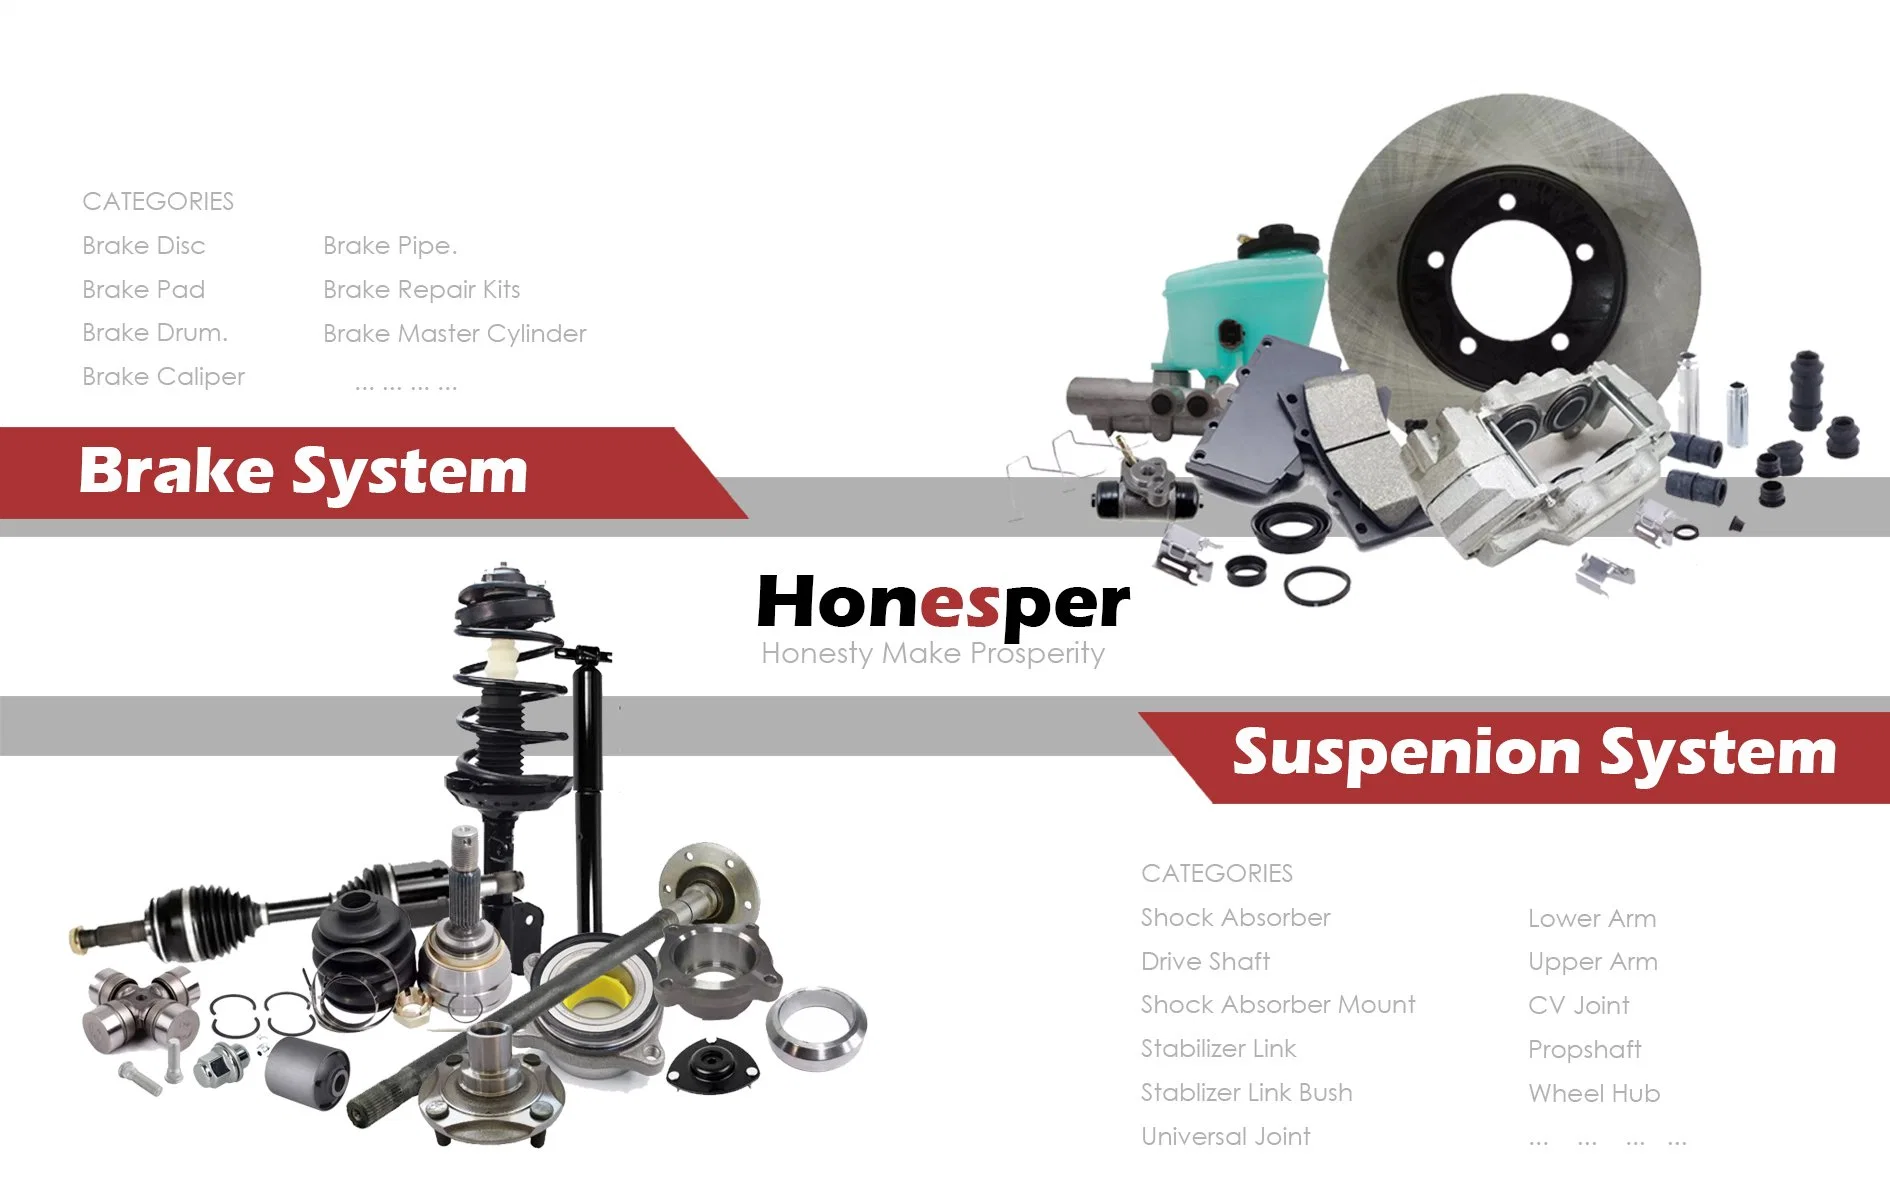 Wholesale/Supplier Car Spare Parts Suspension Parts Engine Parts Body Kits Car Accessories for Toyota Yaris/Vios Axp4#